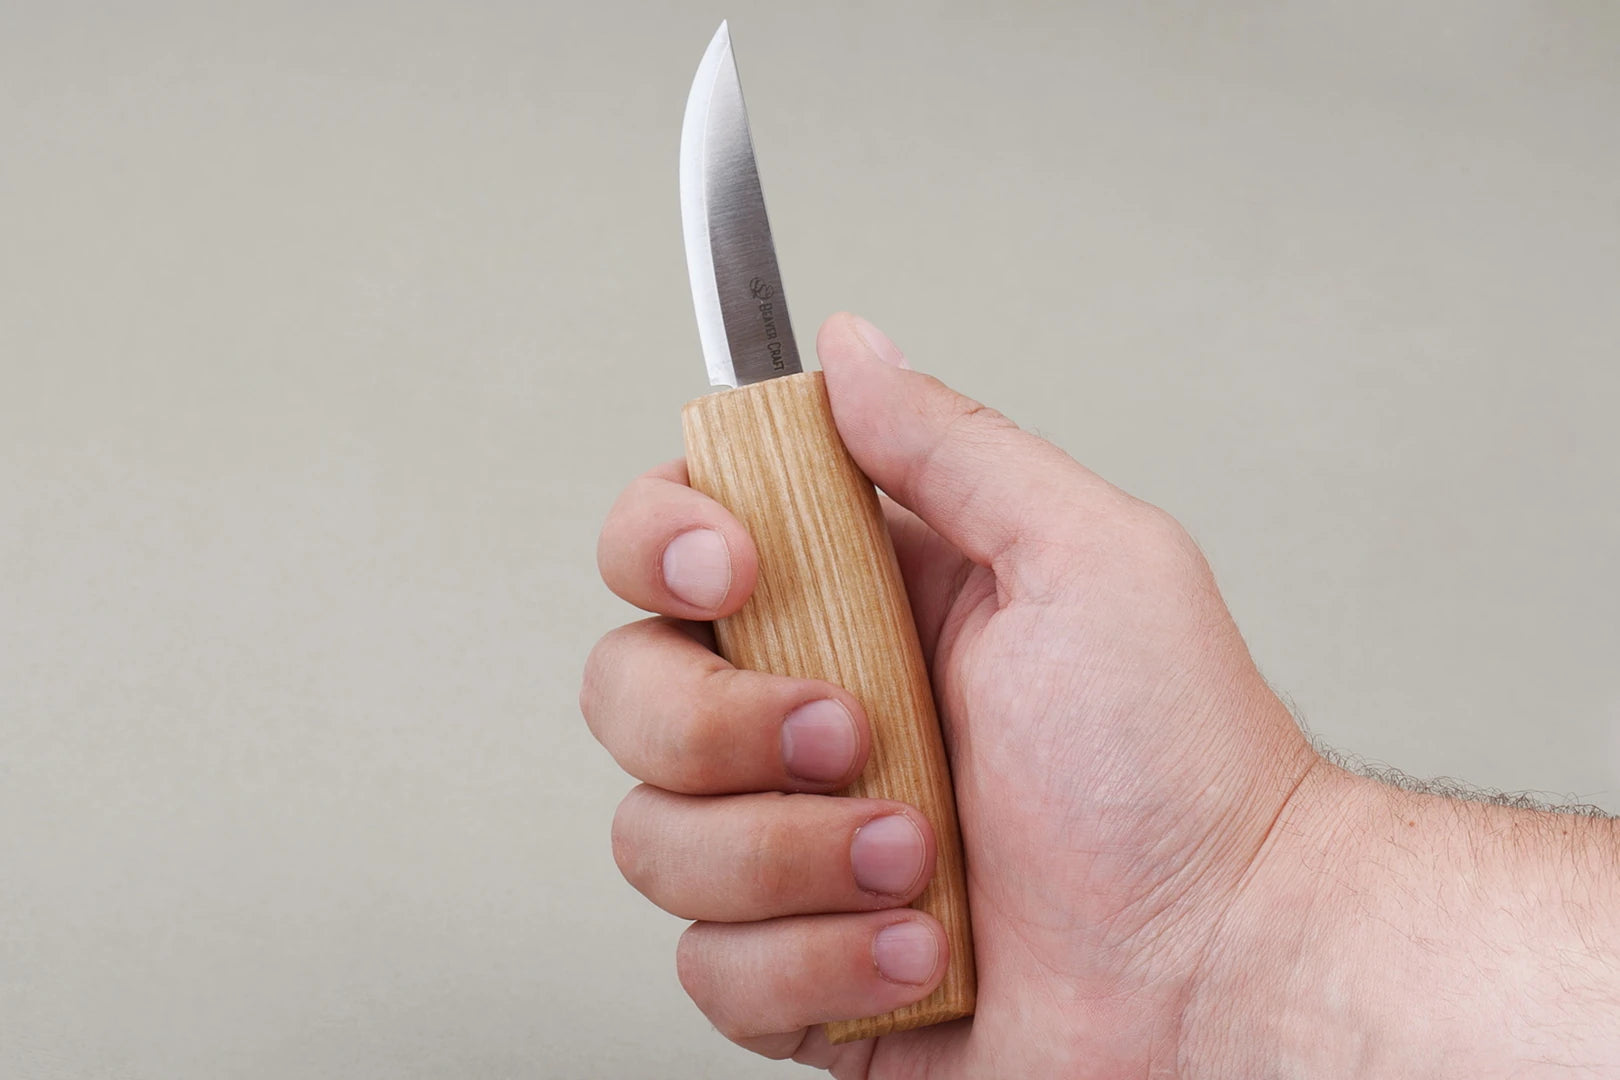 BeaverCraft Wood Carving Knife C15 1.5 Wood Whittling Knife for Details Wood Carving Knives - Chip Carving Knife Woodworking Wood Carving Tools for